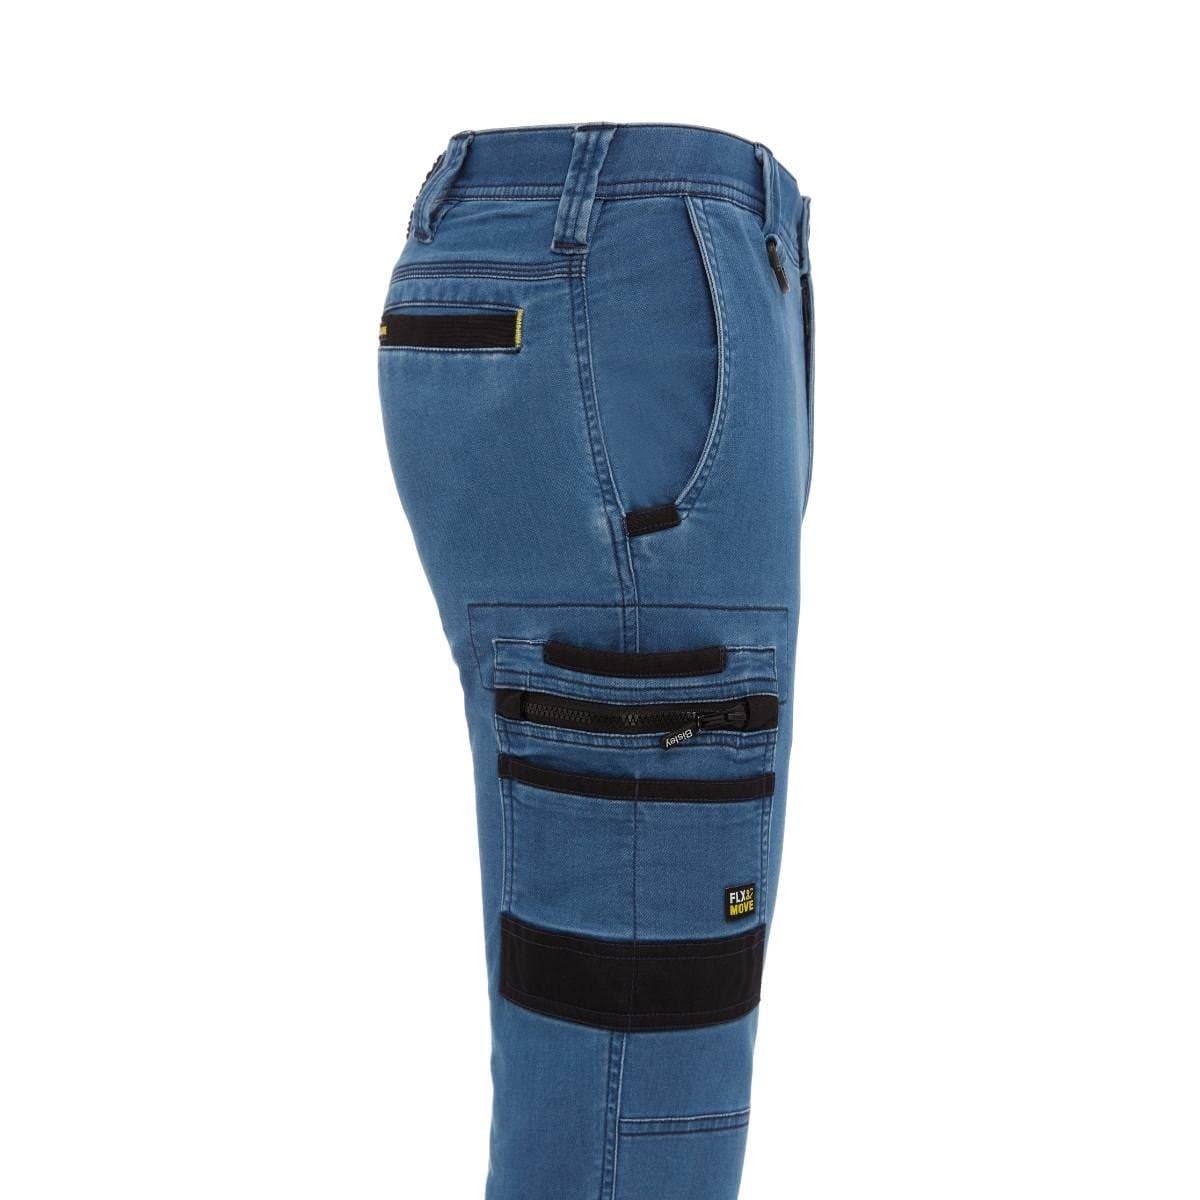 Bisley Flx & Move™ Stretch Denim Cargo Cuffed Pants BPC6335